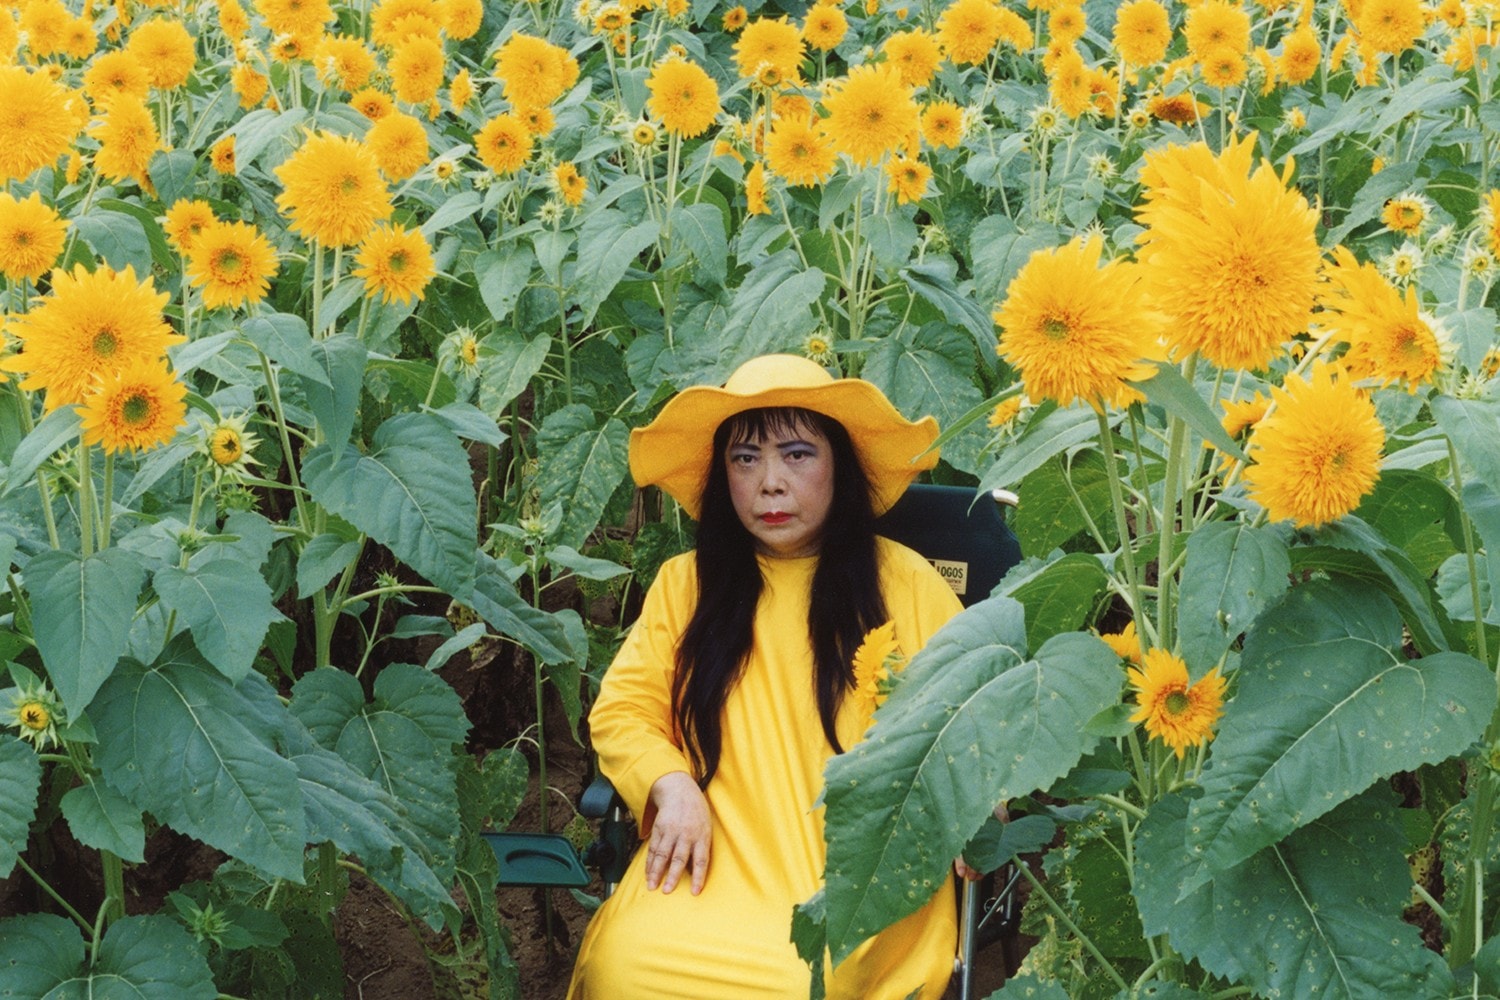 yayoi kusama new york botanical garden exhibition 2021 schedule sunflowers yellow